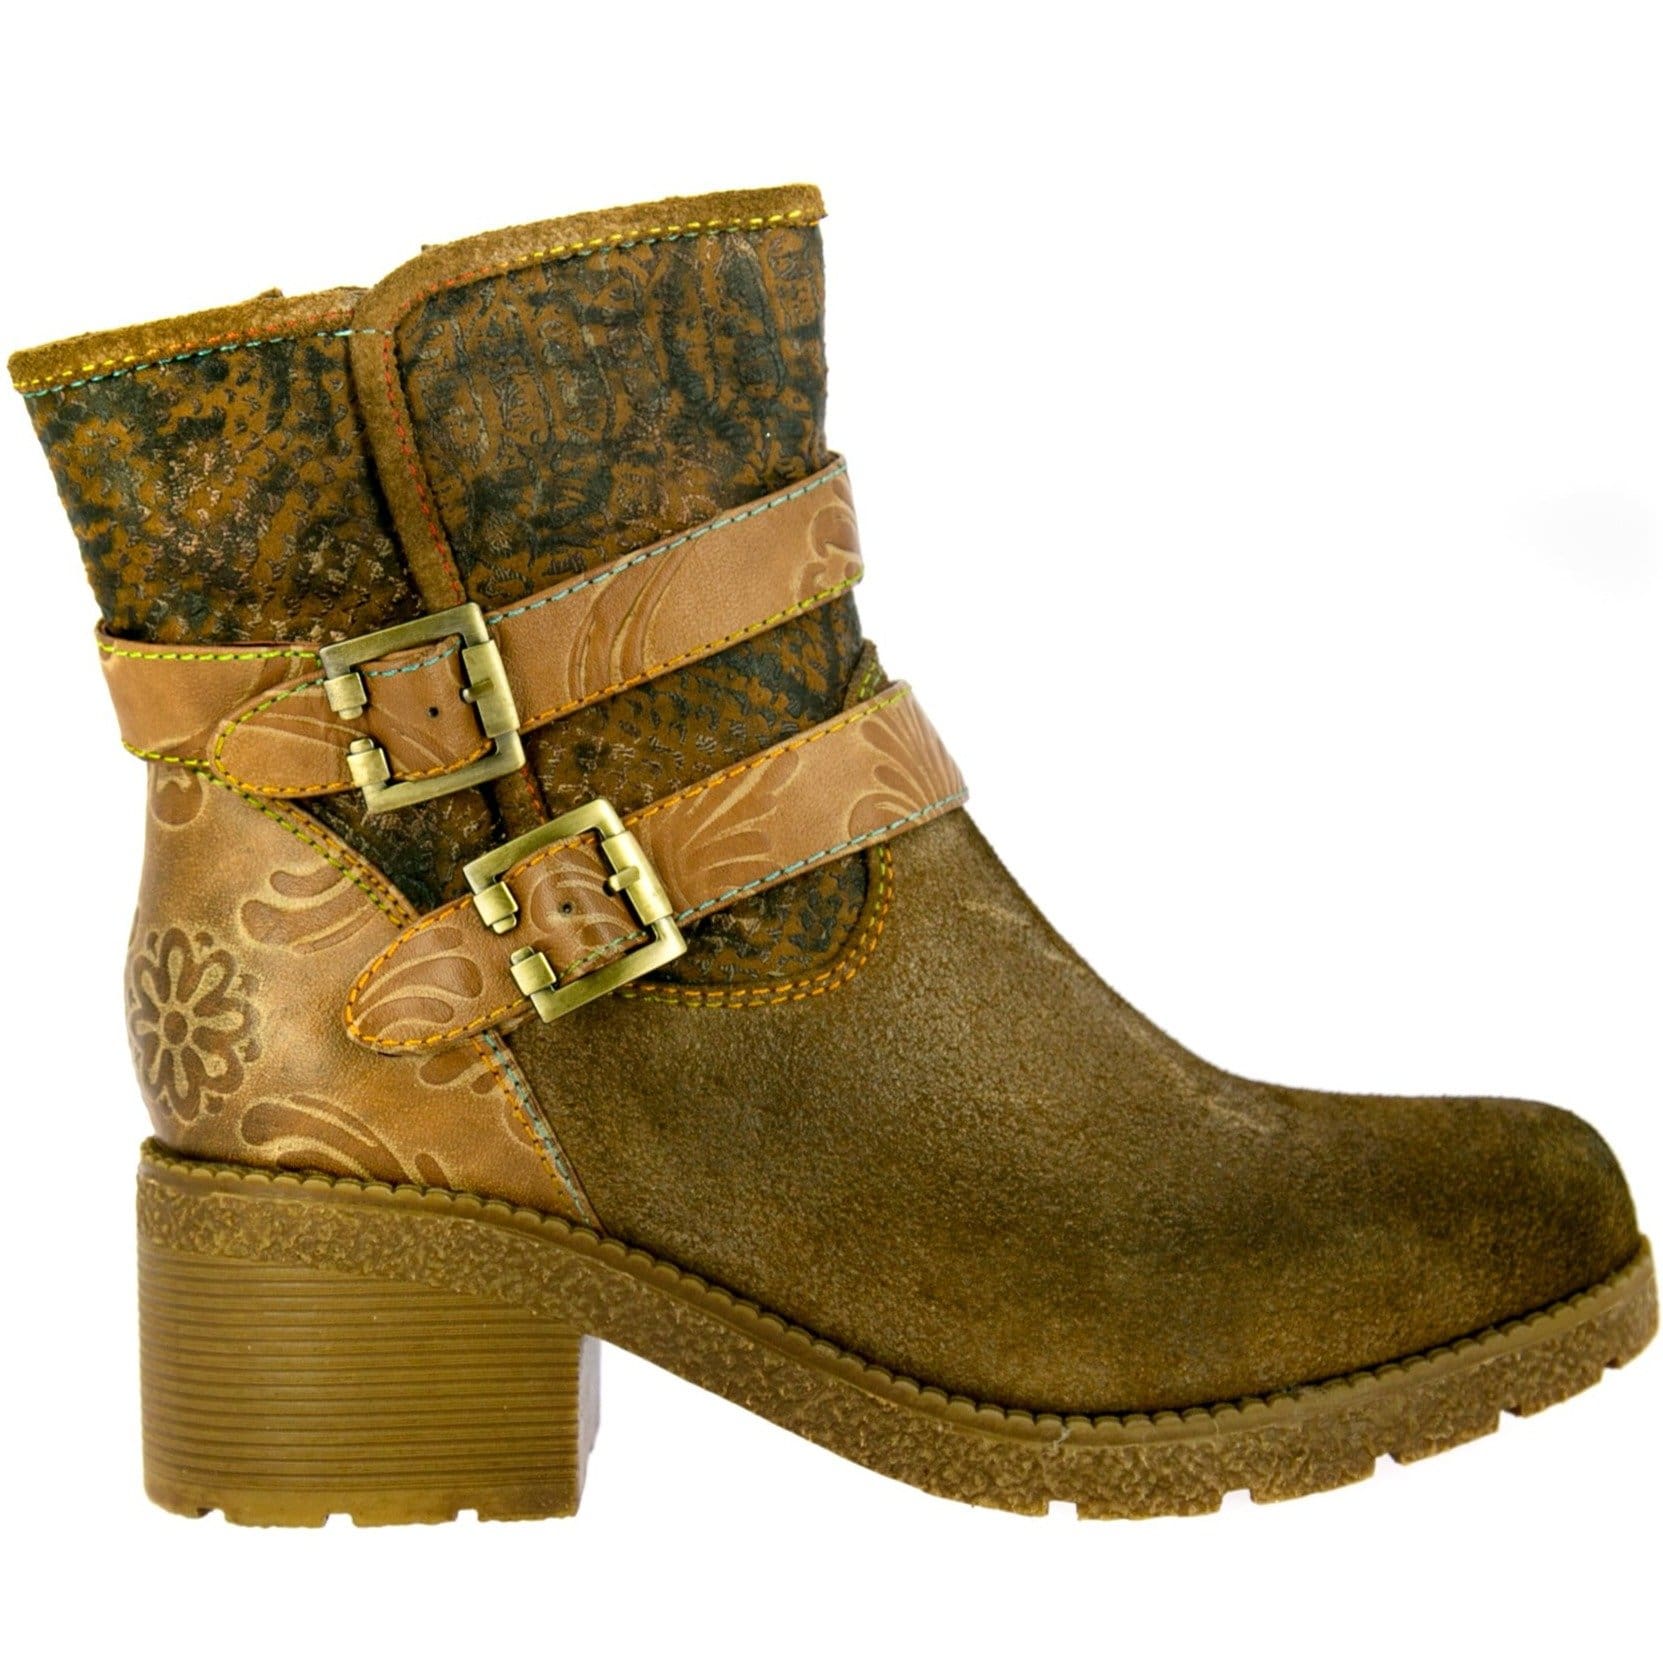 Schuhe CORINE 01 - 35 / Camel - Stiefelette